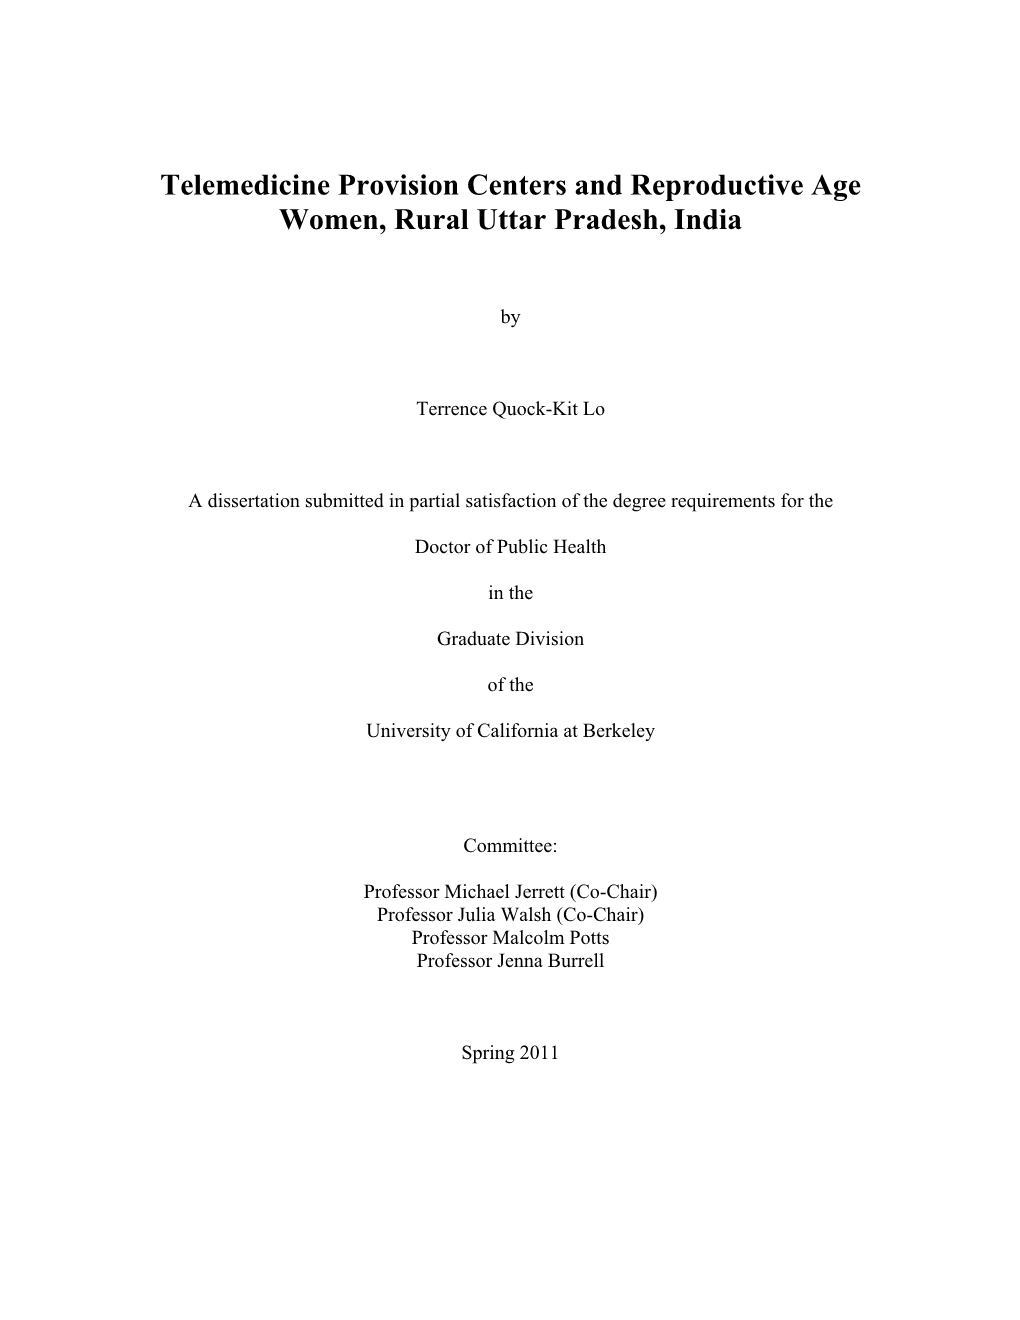 Telemedicine Provision Centers and Reproductive Age Women, Rural Uttar Pradesh, India